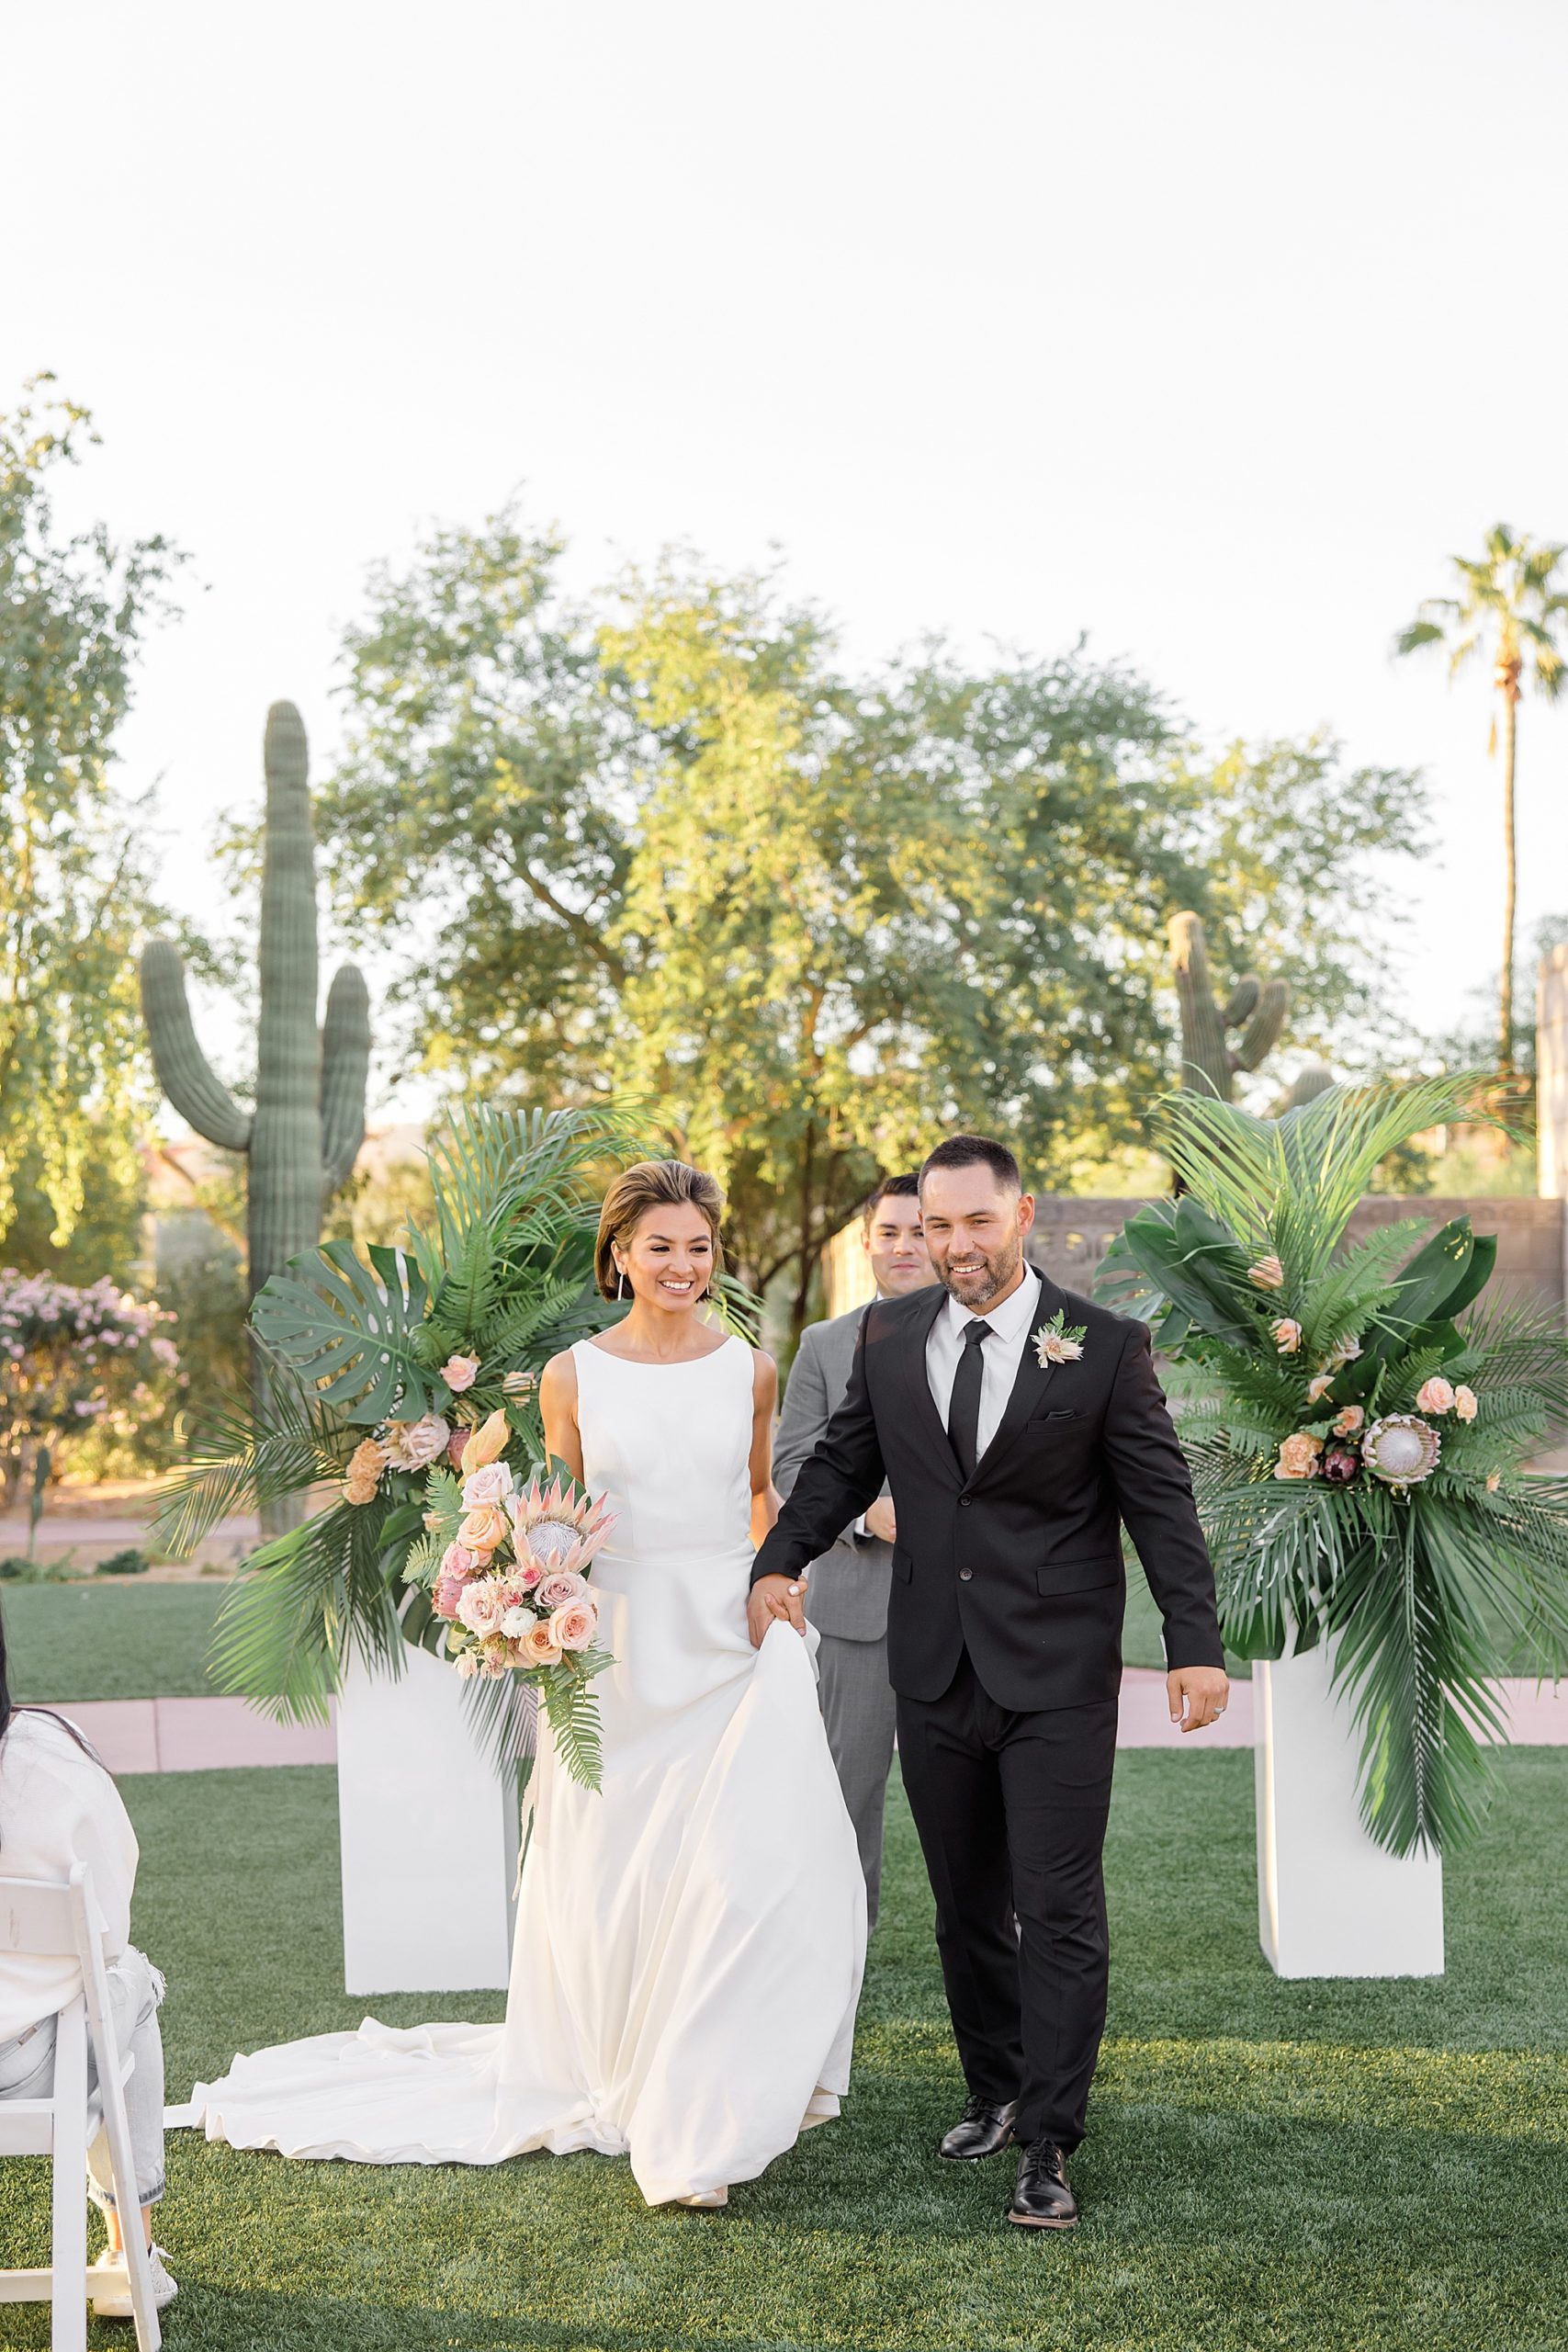 newlyweds walk up aisle after ceremony at the Arizona Biltmore